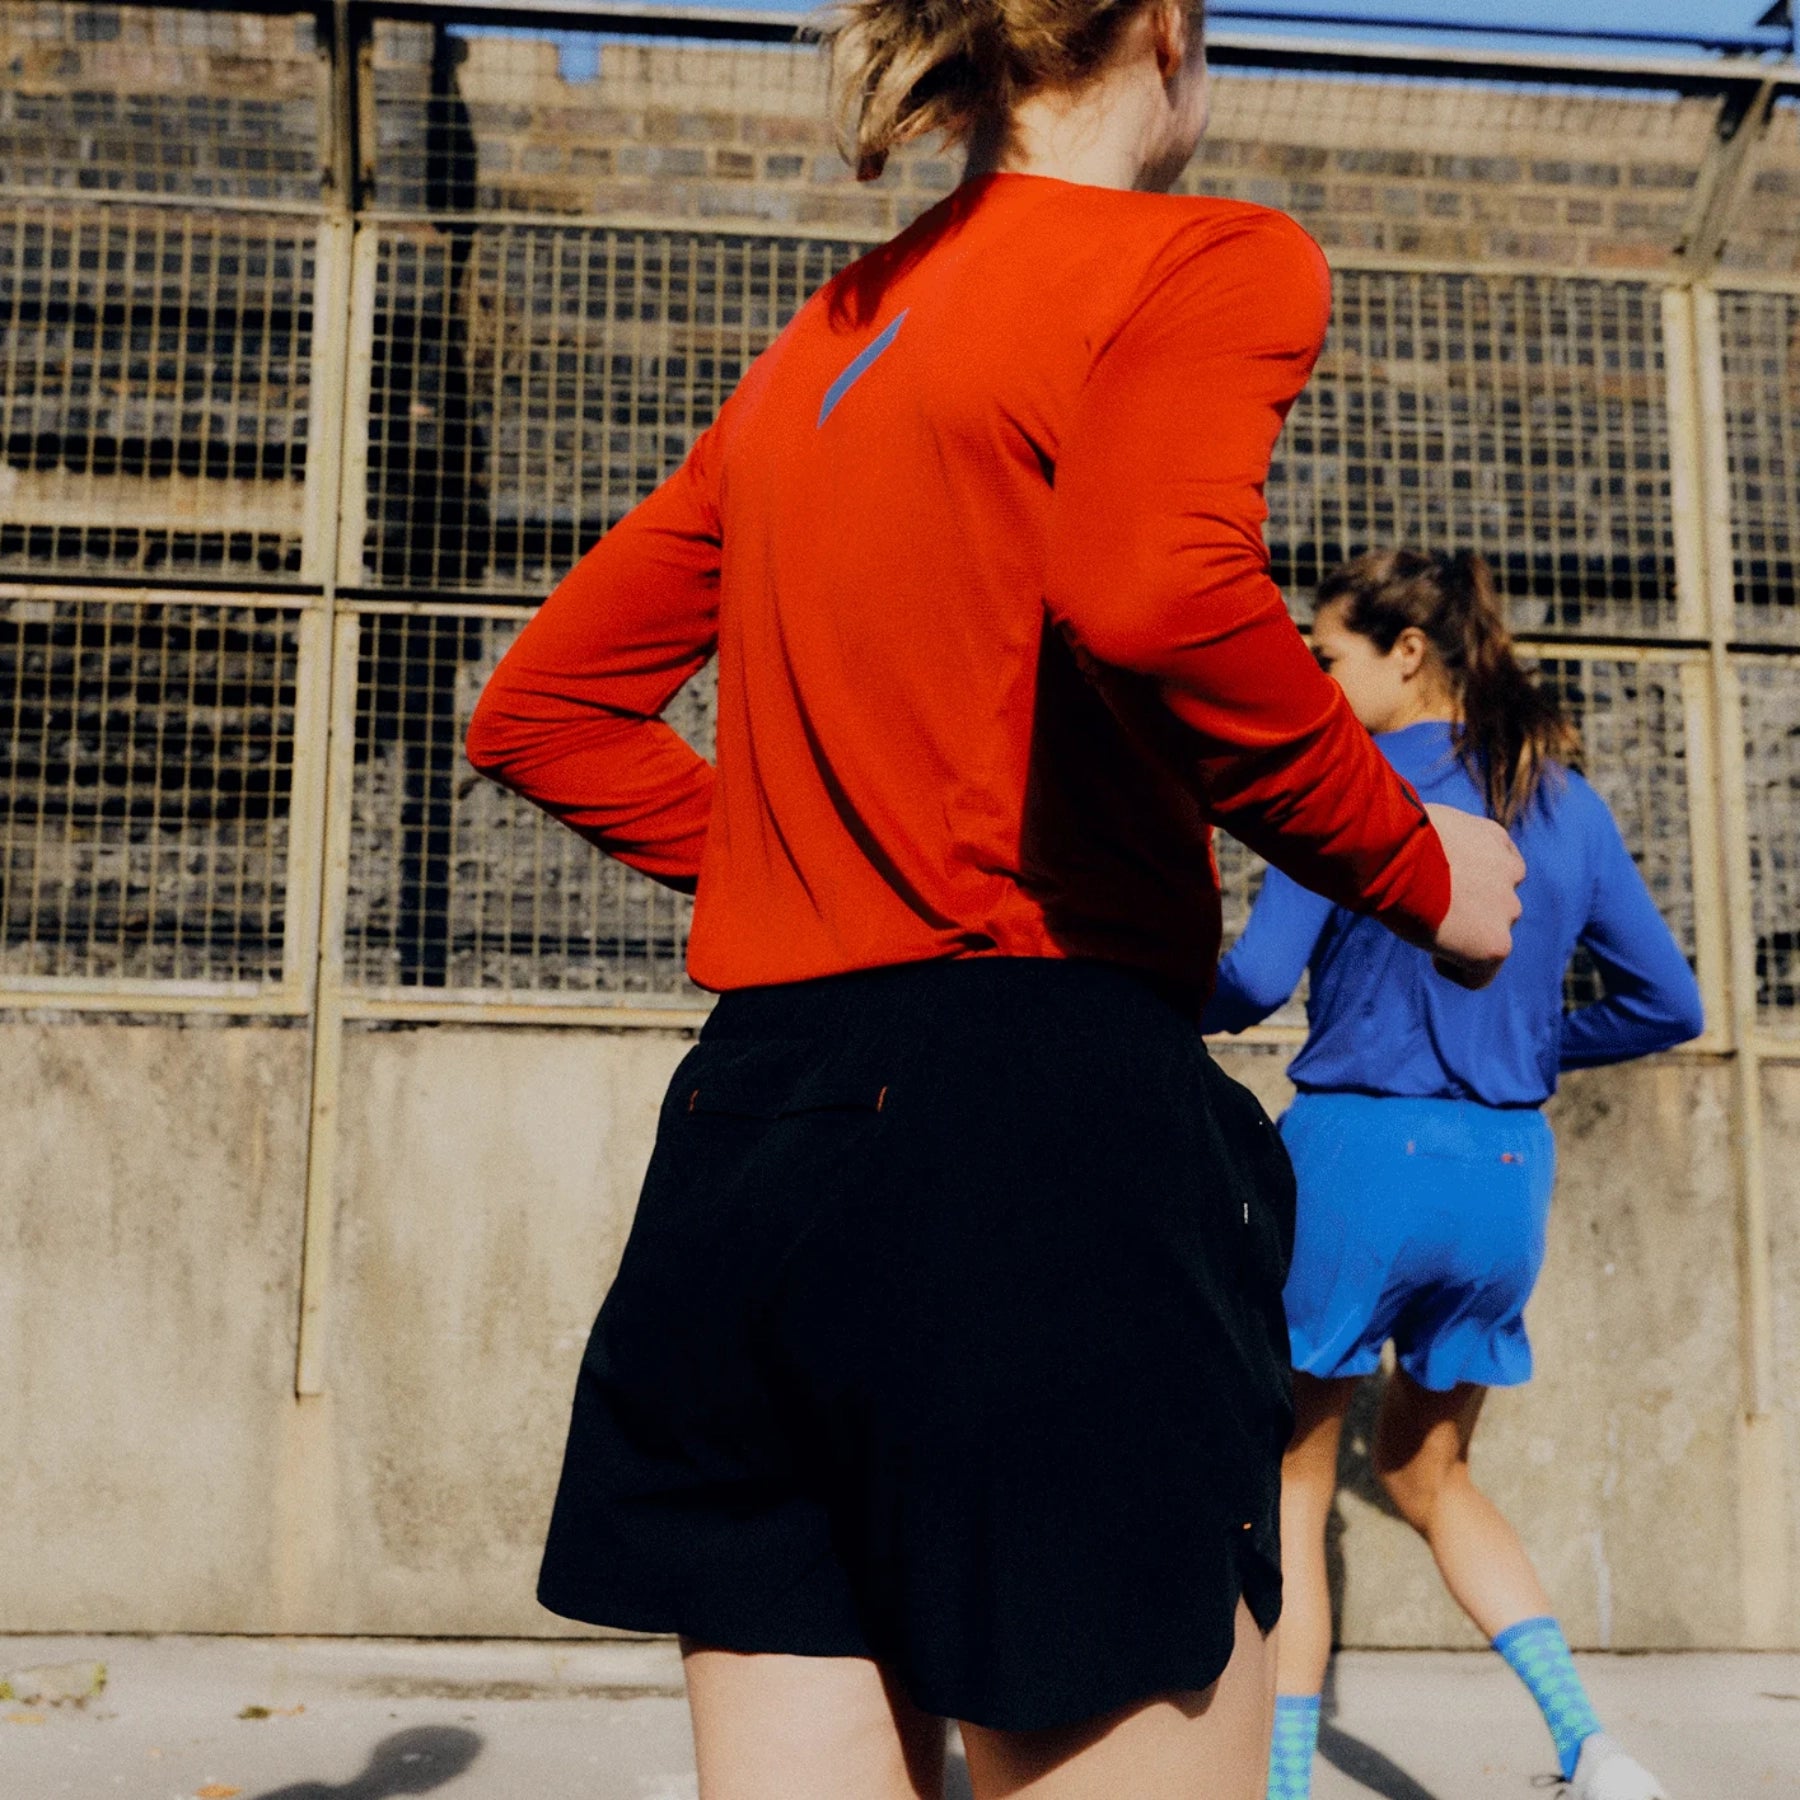 Women&#39;s Run Shorts - Blue